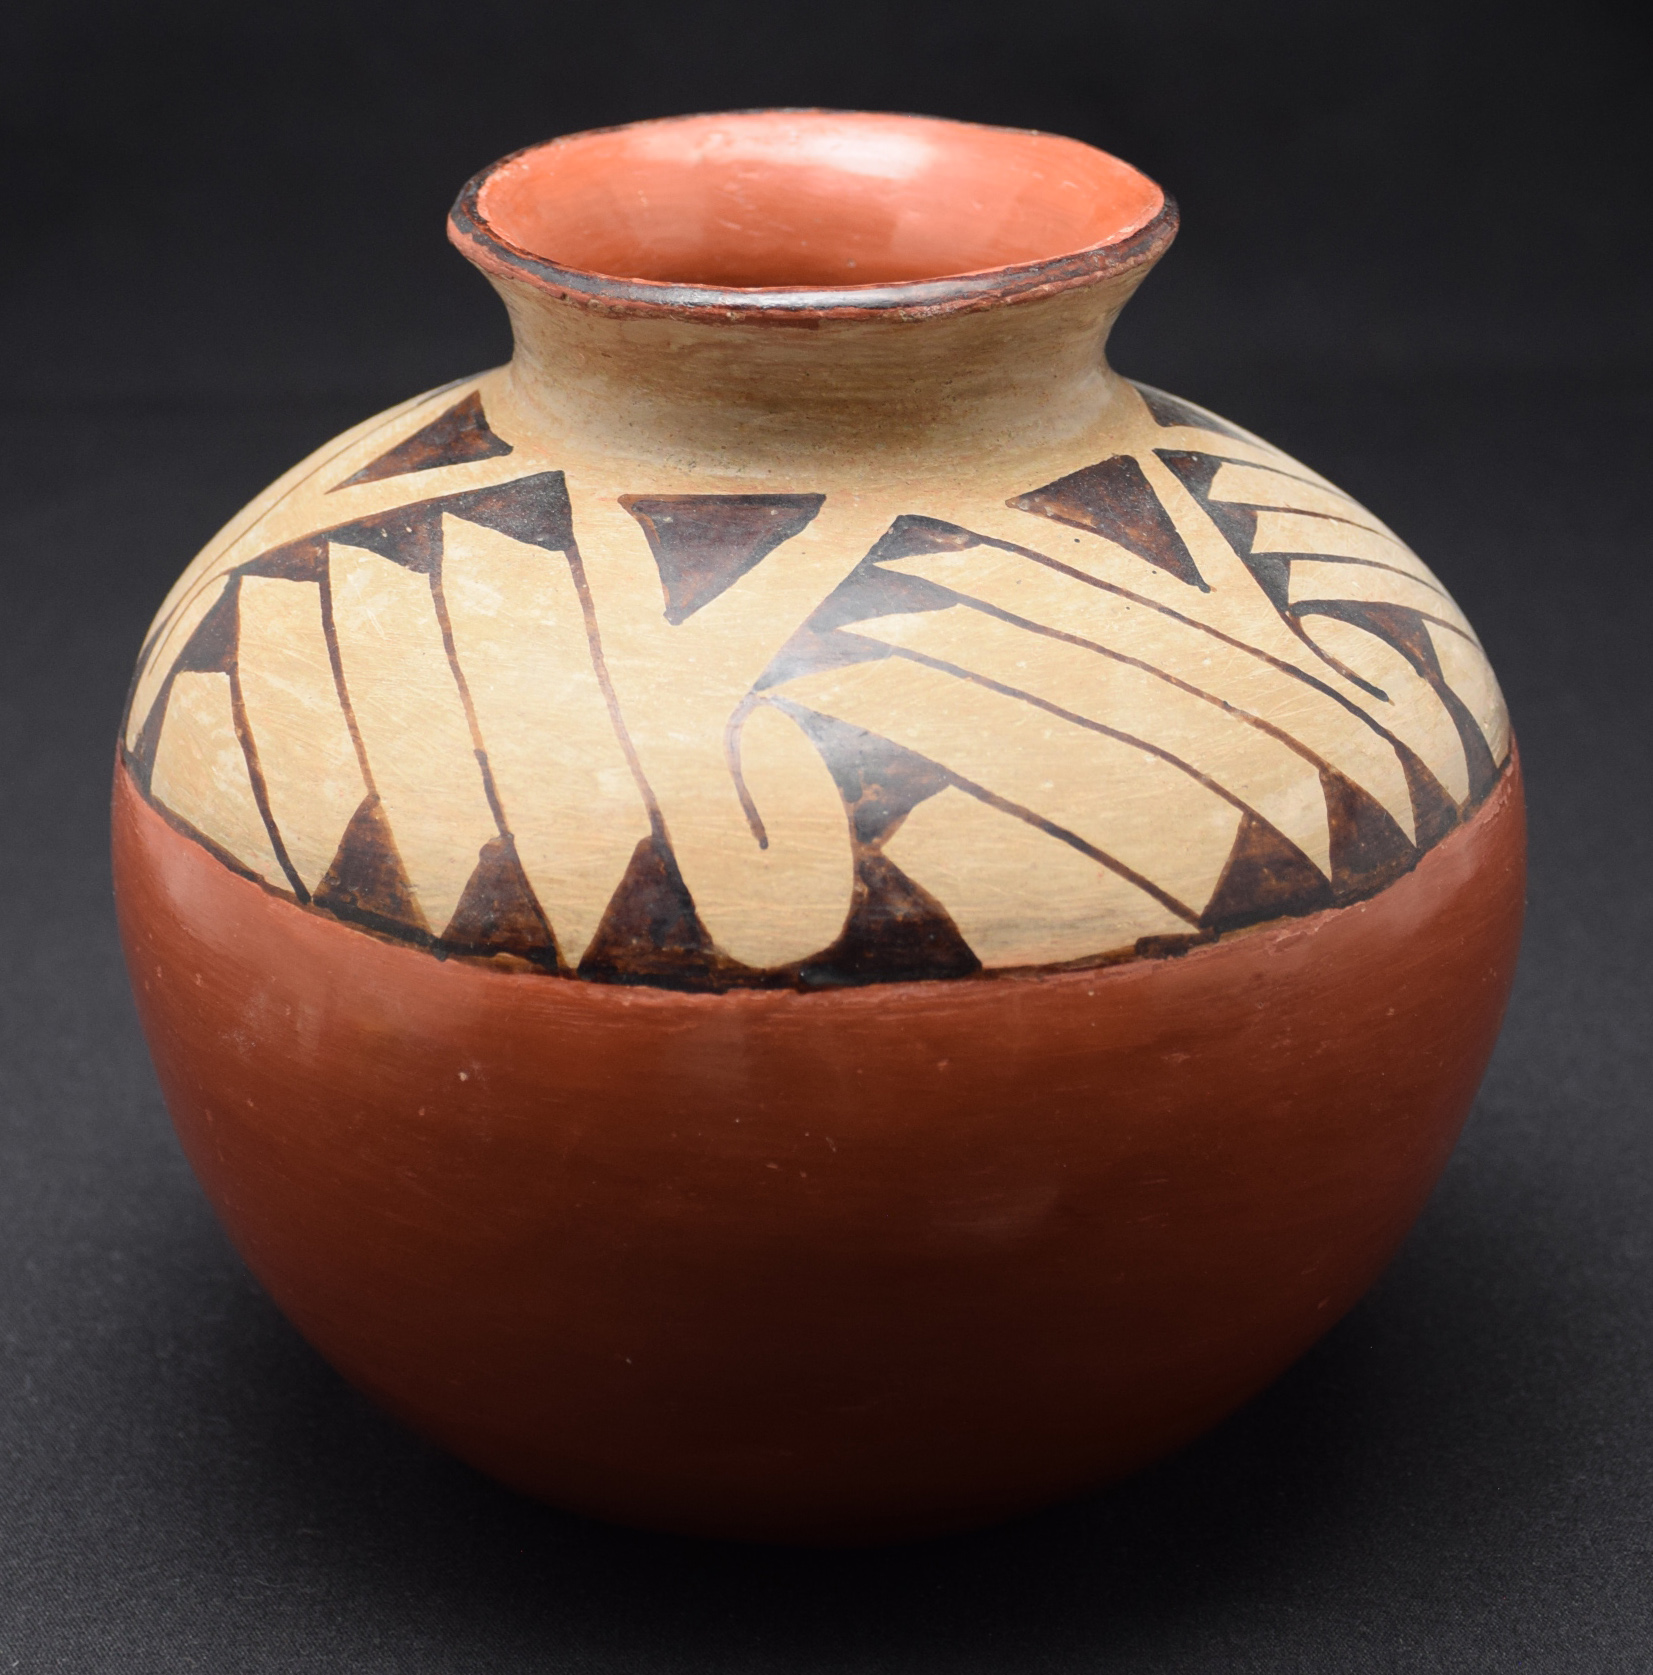 Pee-Posh pottery collection, vase with geometric design